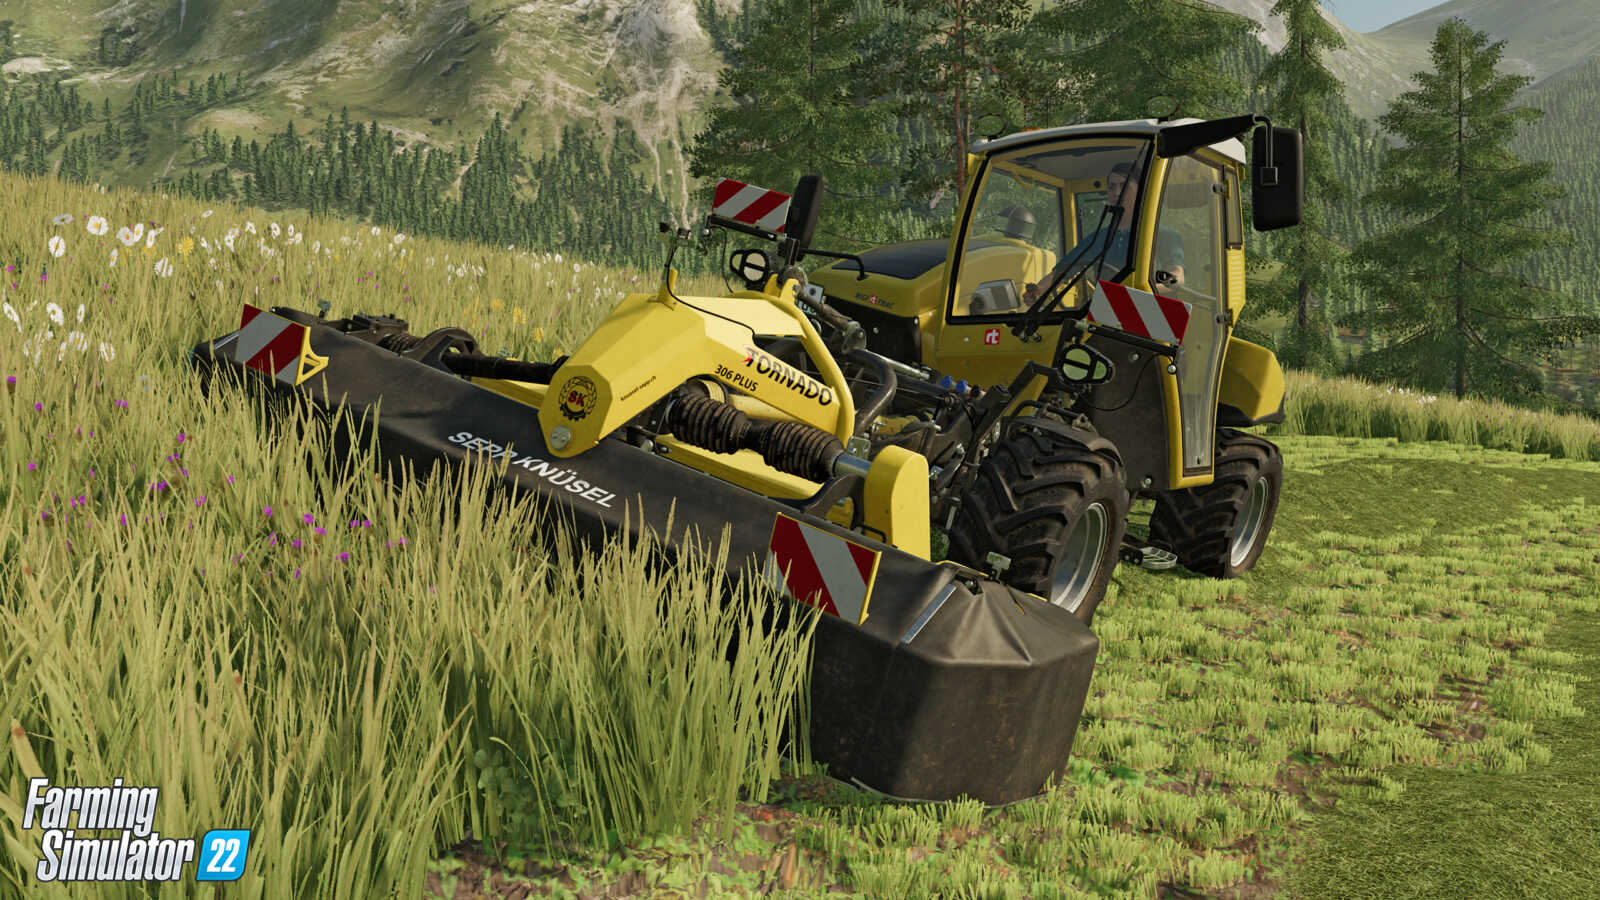 Farming Simulator 17 - Tractor Pack DLC